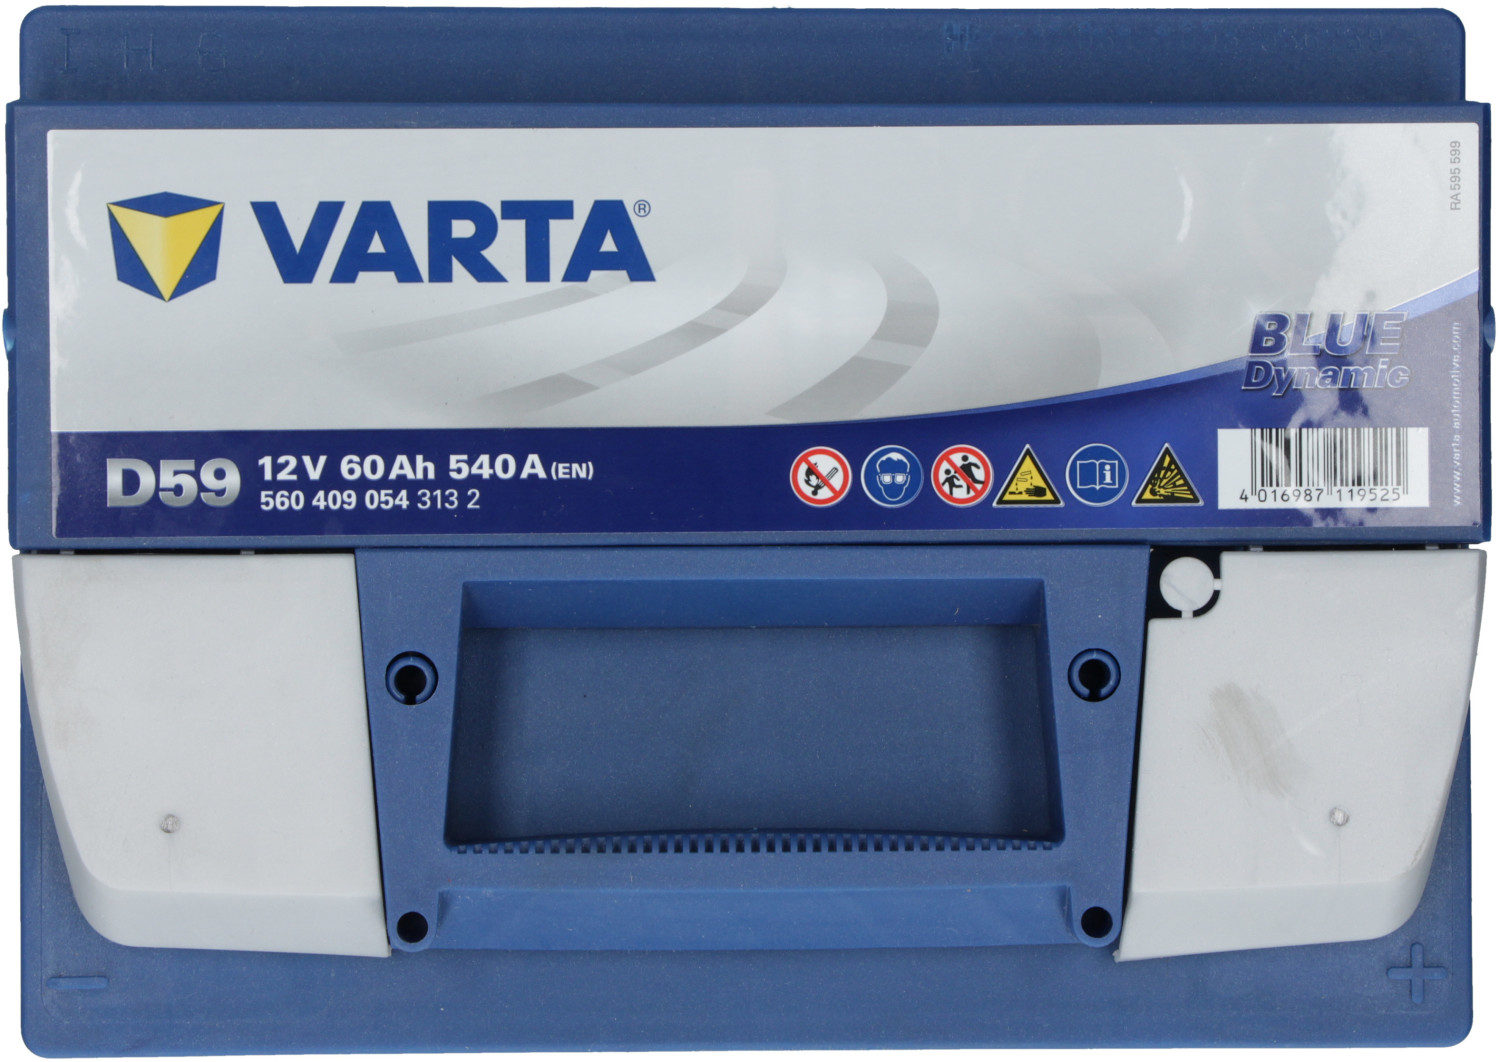 VARTA BLUE dynamic, D59 Batterie 12V, 540A, 60Ah Art. Nr